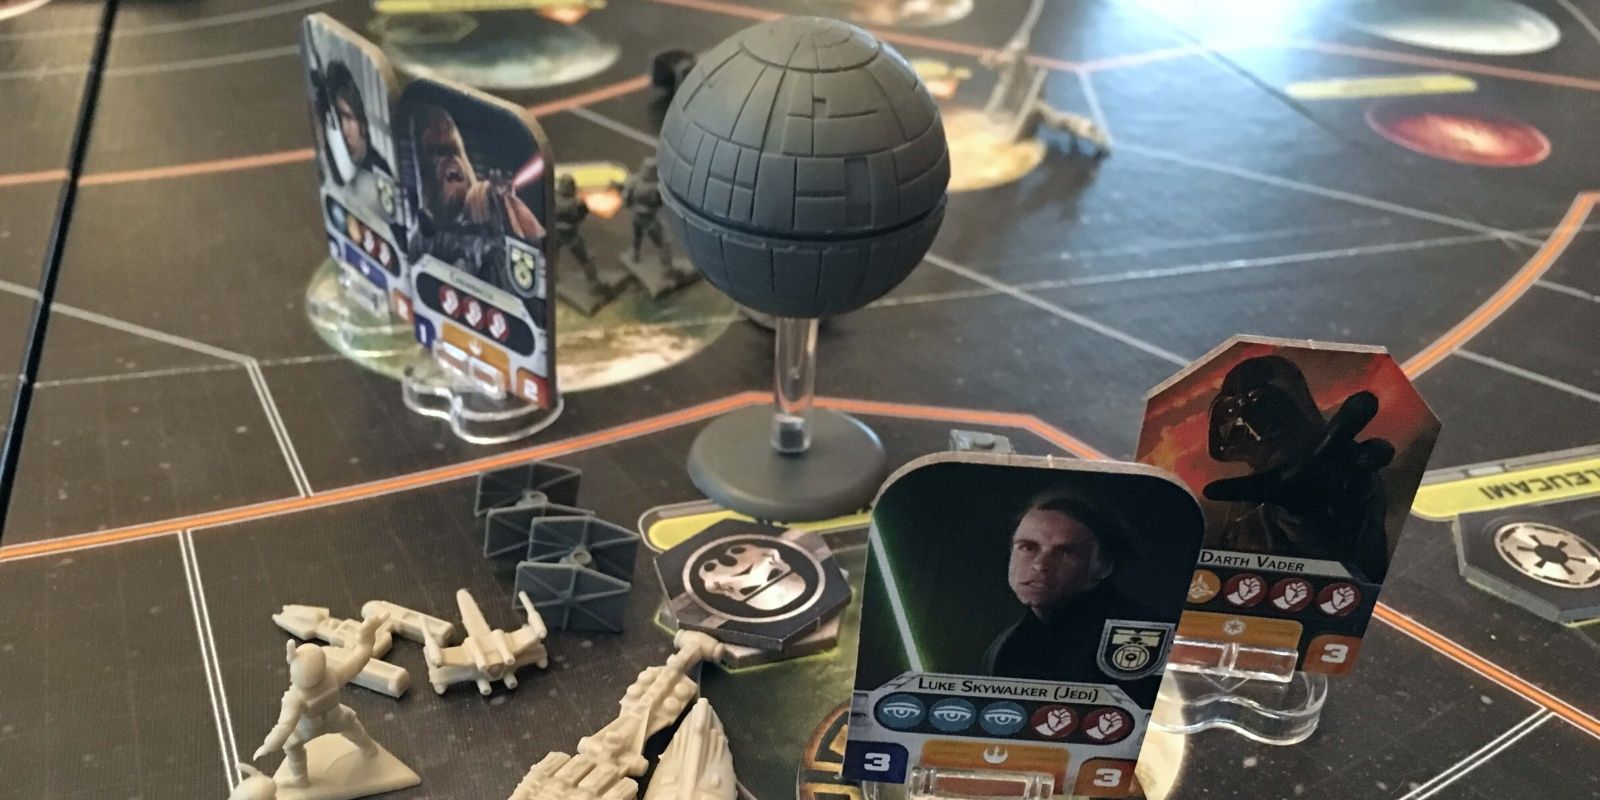 Star Wars Rebellion Board Game Being Played